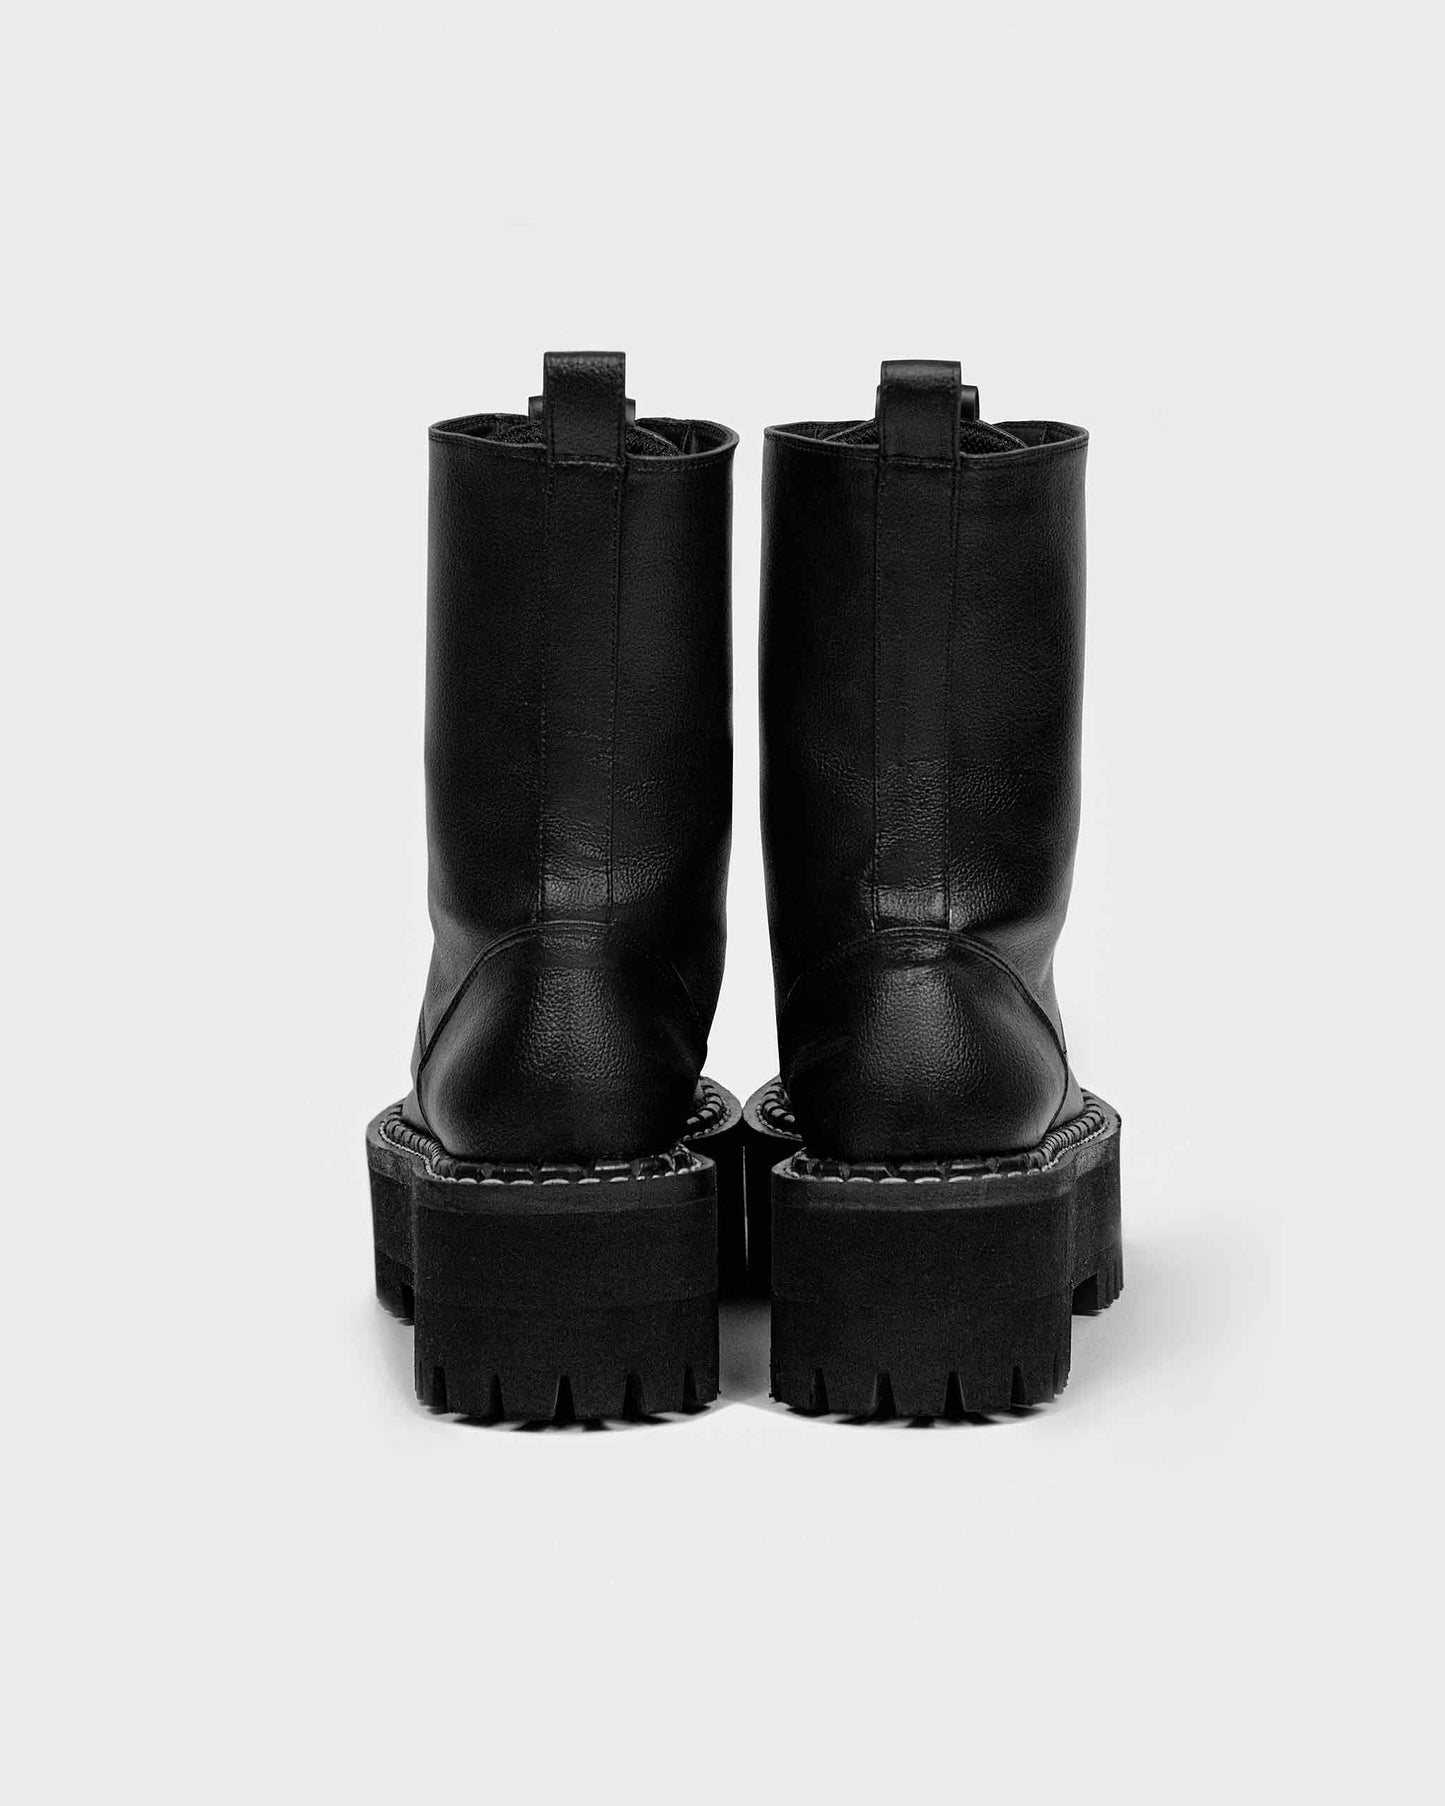 Worker Monster Black Vegea grape leather boots